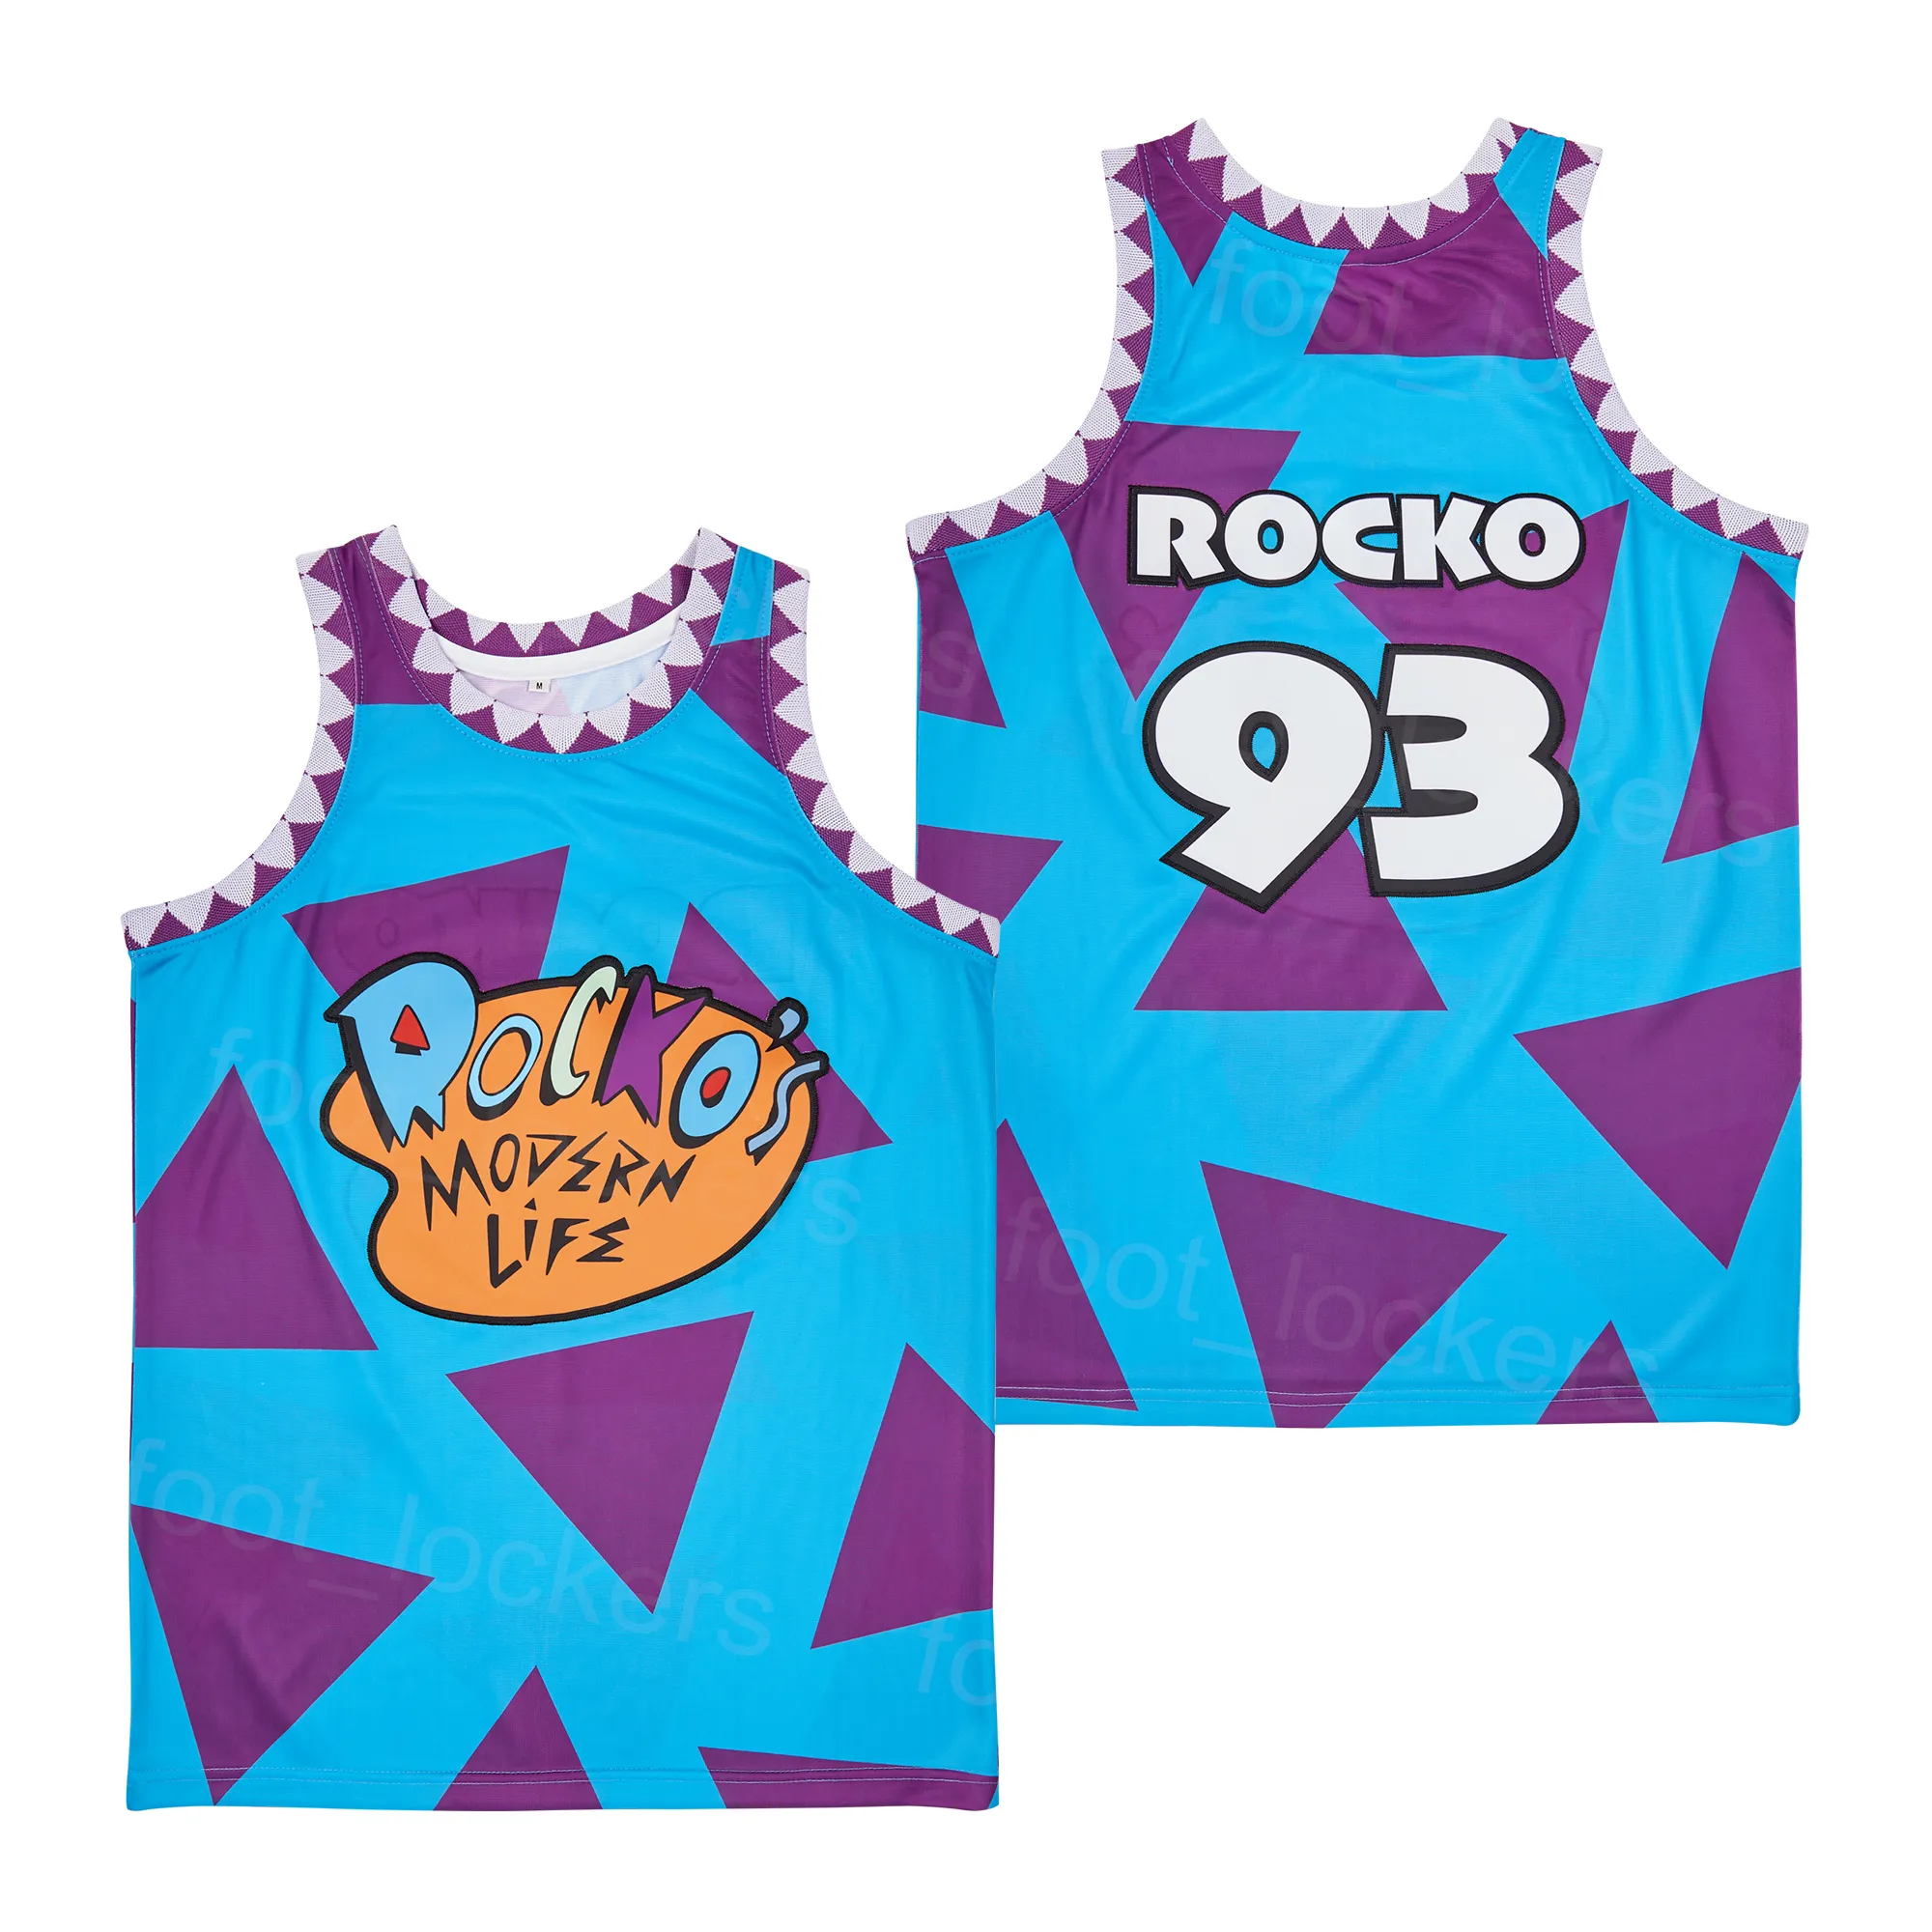 Basketball Movie 93 Rocko Jersey Film Rocko's Modern Life Shirt Retro High School Summer Respirant HipHop Pure Cotton College Pour les fans de sport HipHop Team Blue Retro